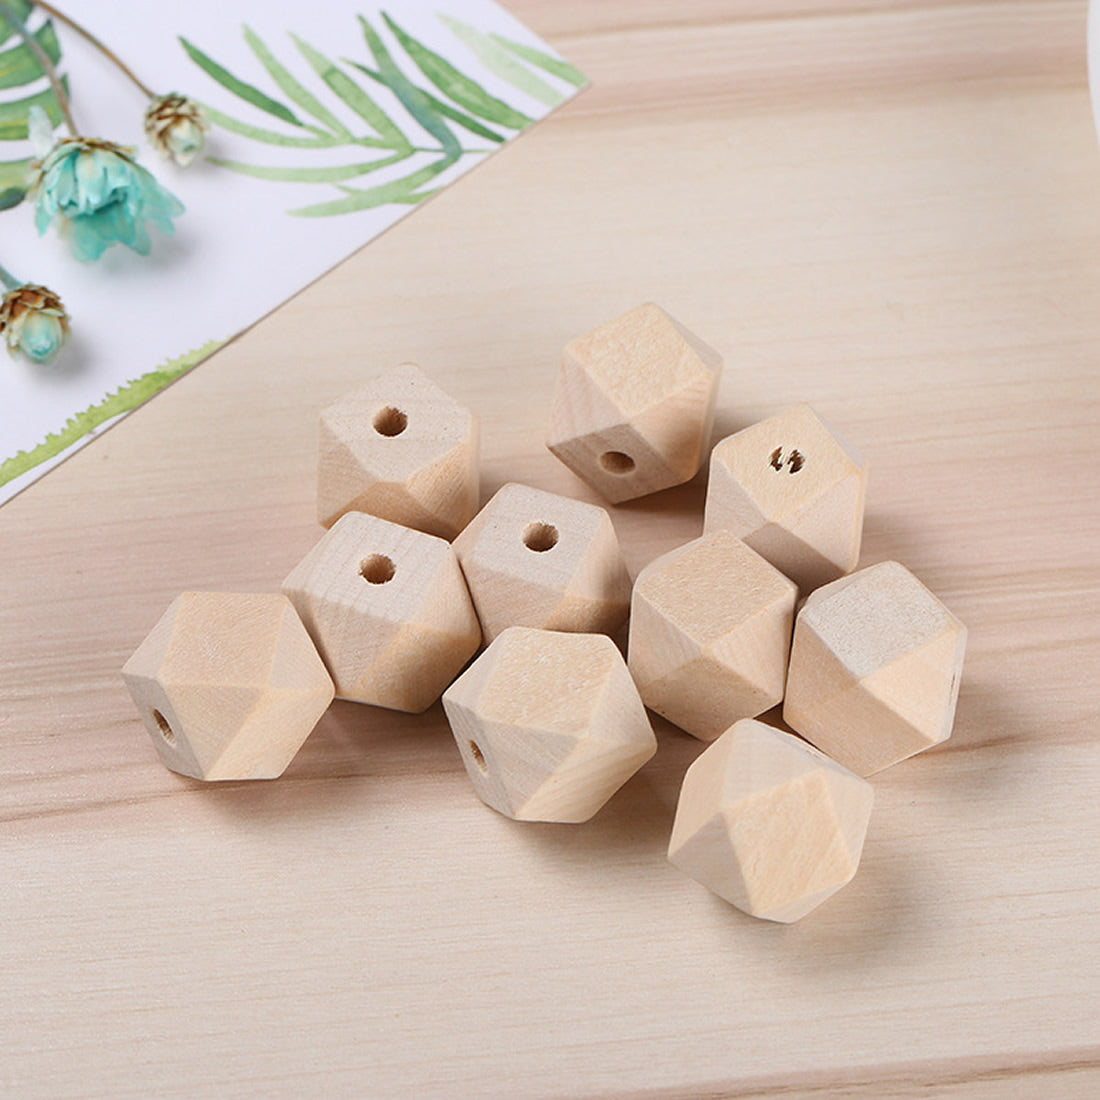 10 Perles hexagones en bois naturel 10, 12 ou 14mm